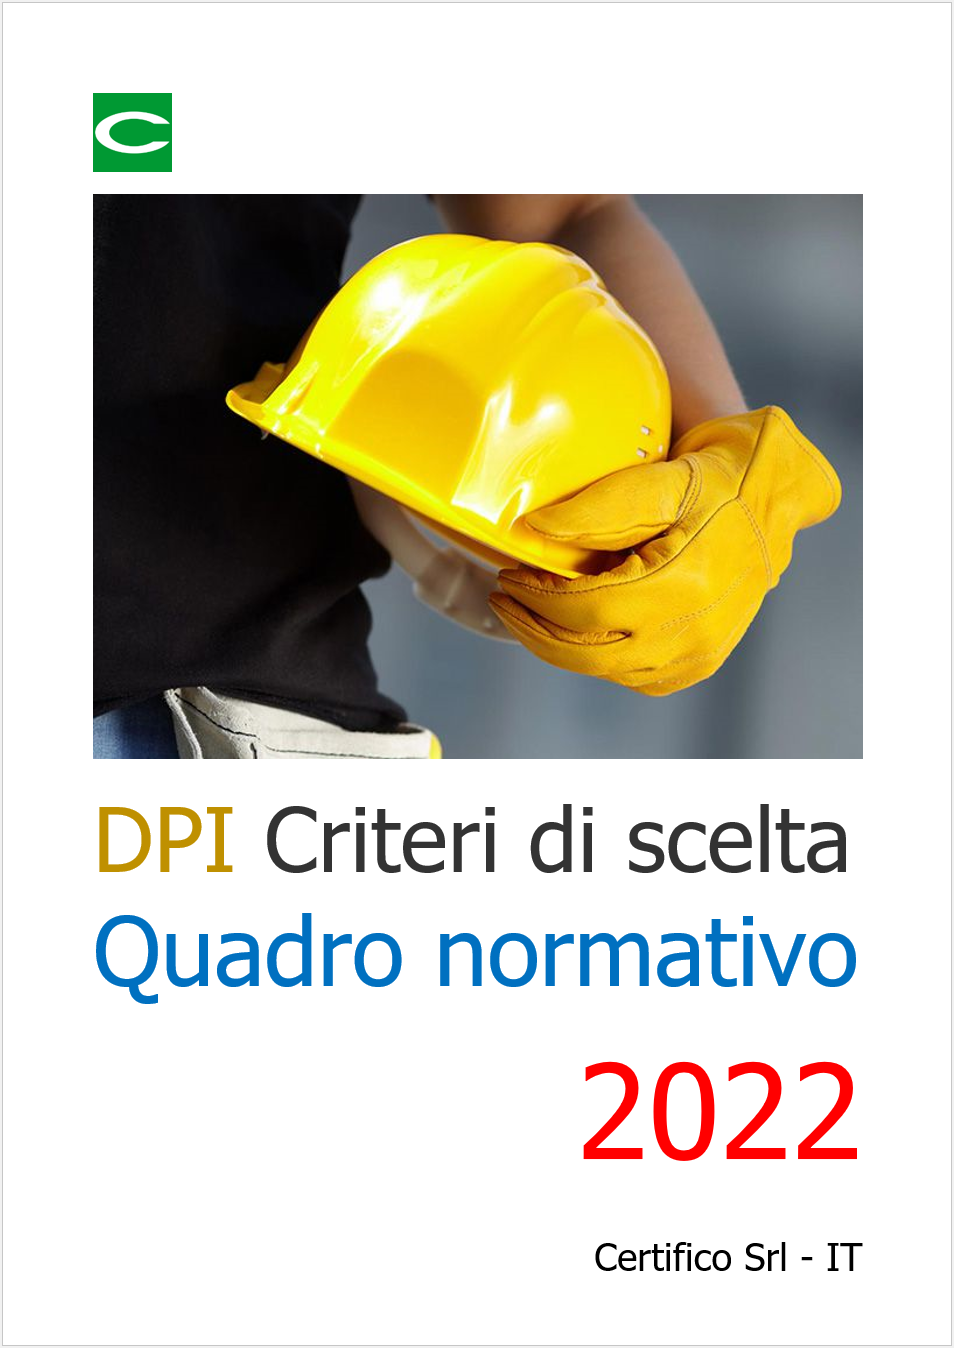 DPI criteri di scelta Rev 2 0 2022